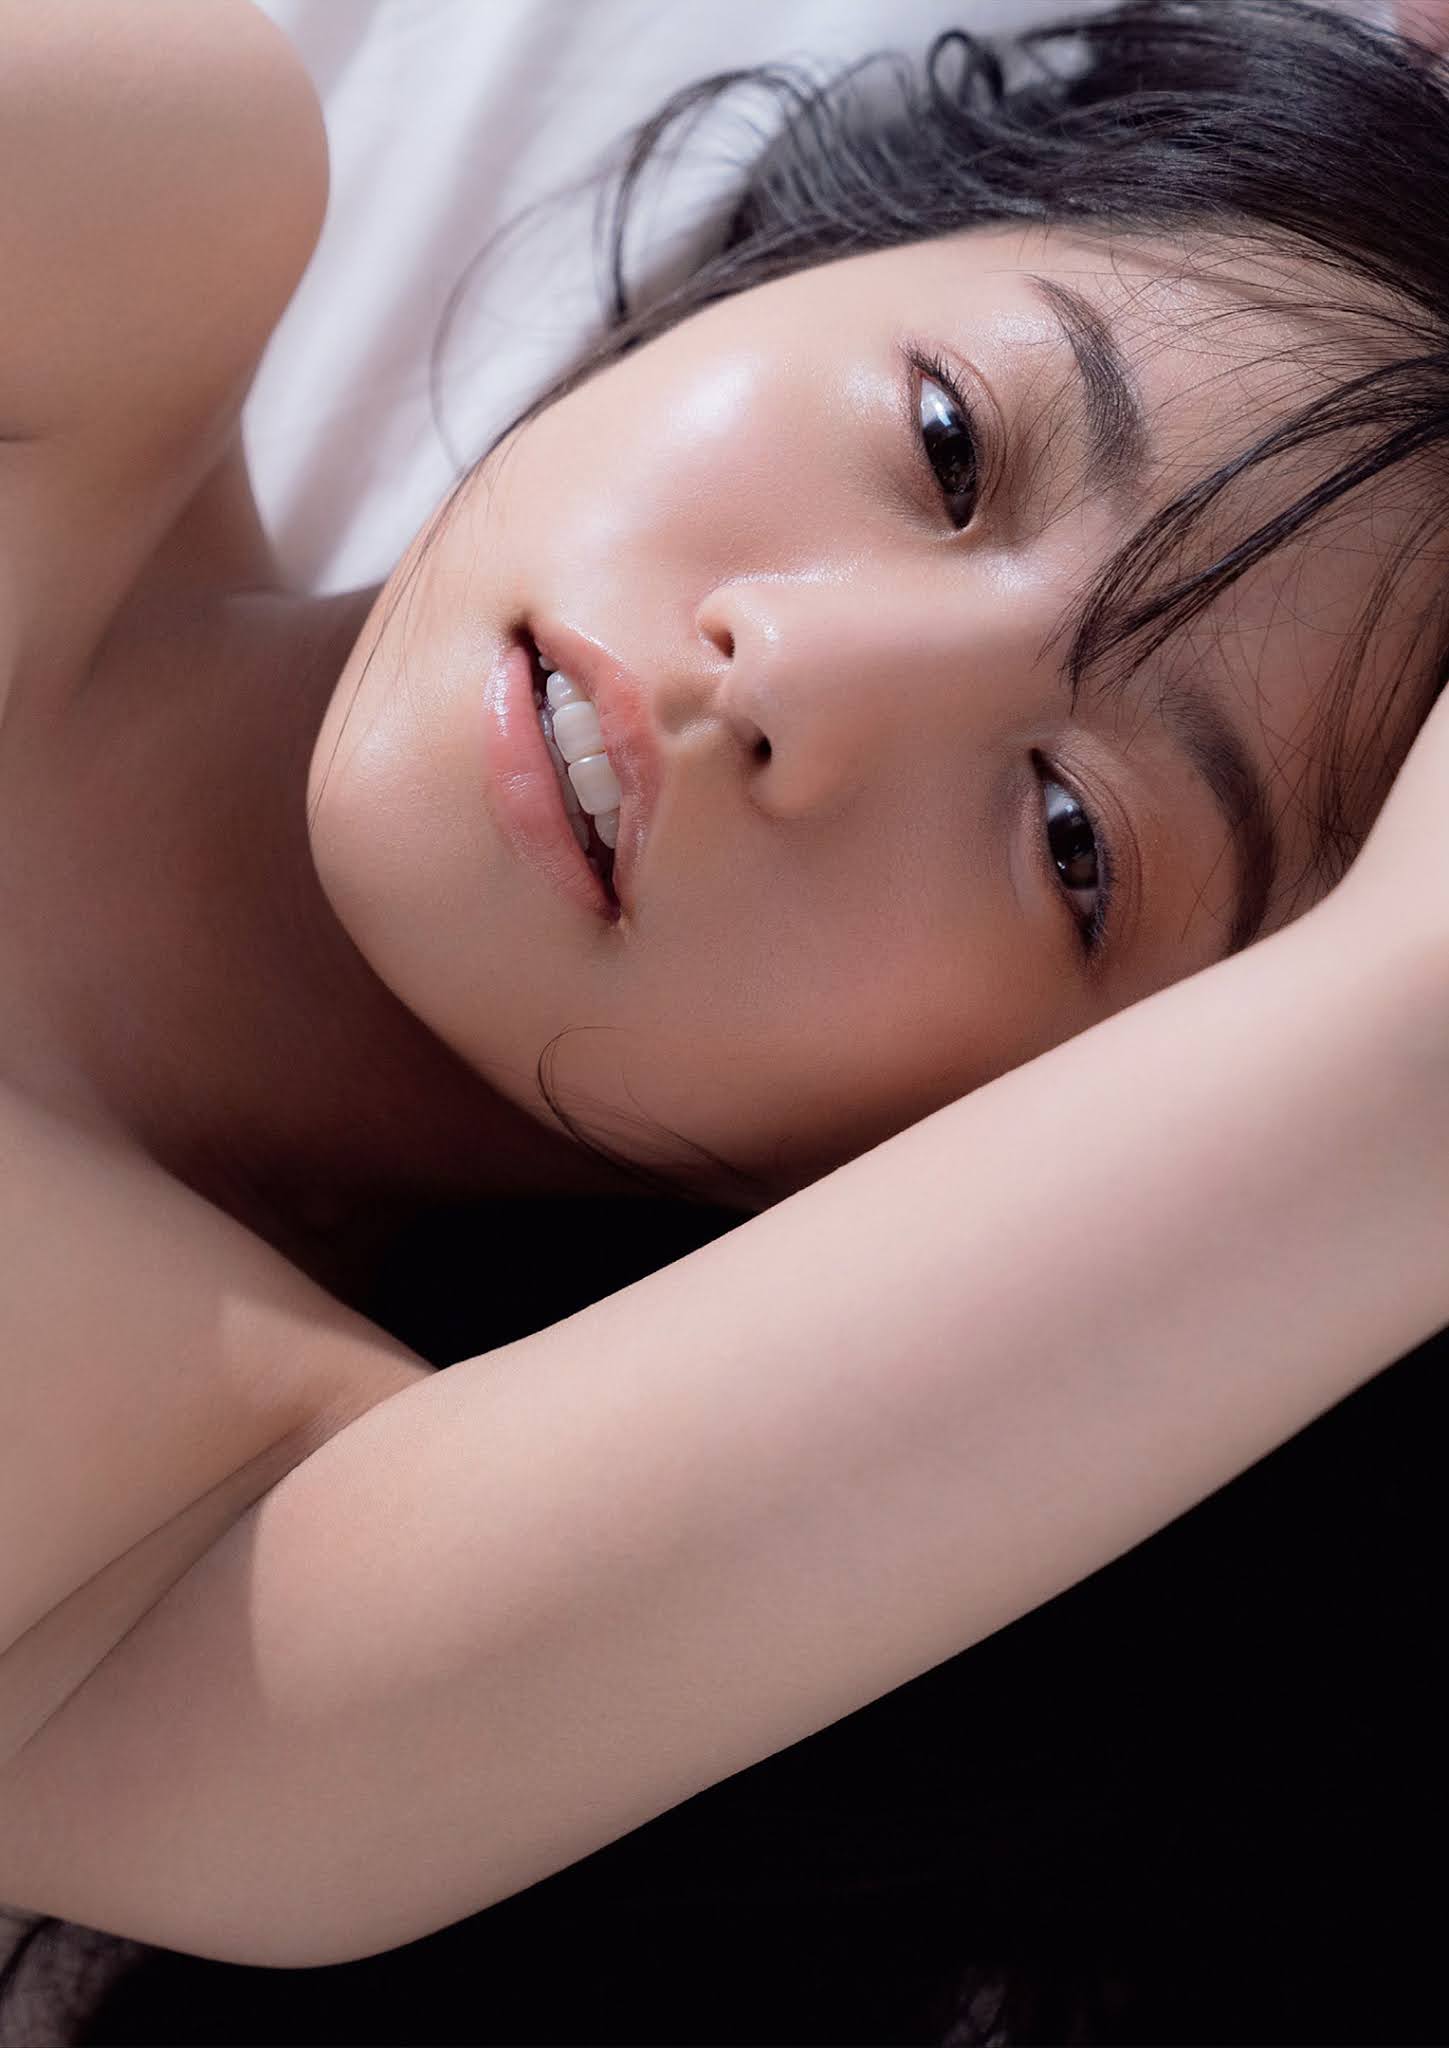 Yuno Ohara 大原優乃, Weekly Playboy 2021 No.41 (週刊プレイボーイ 2021年41号)